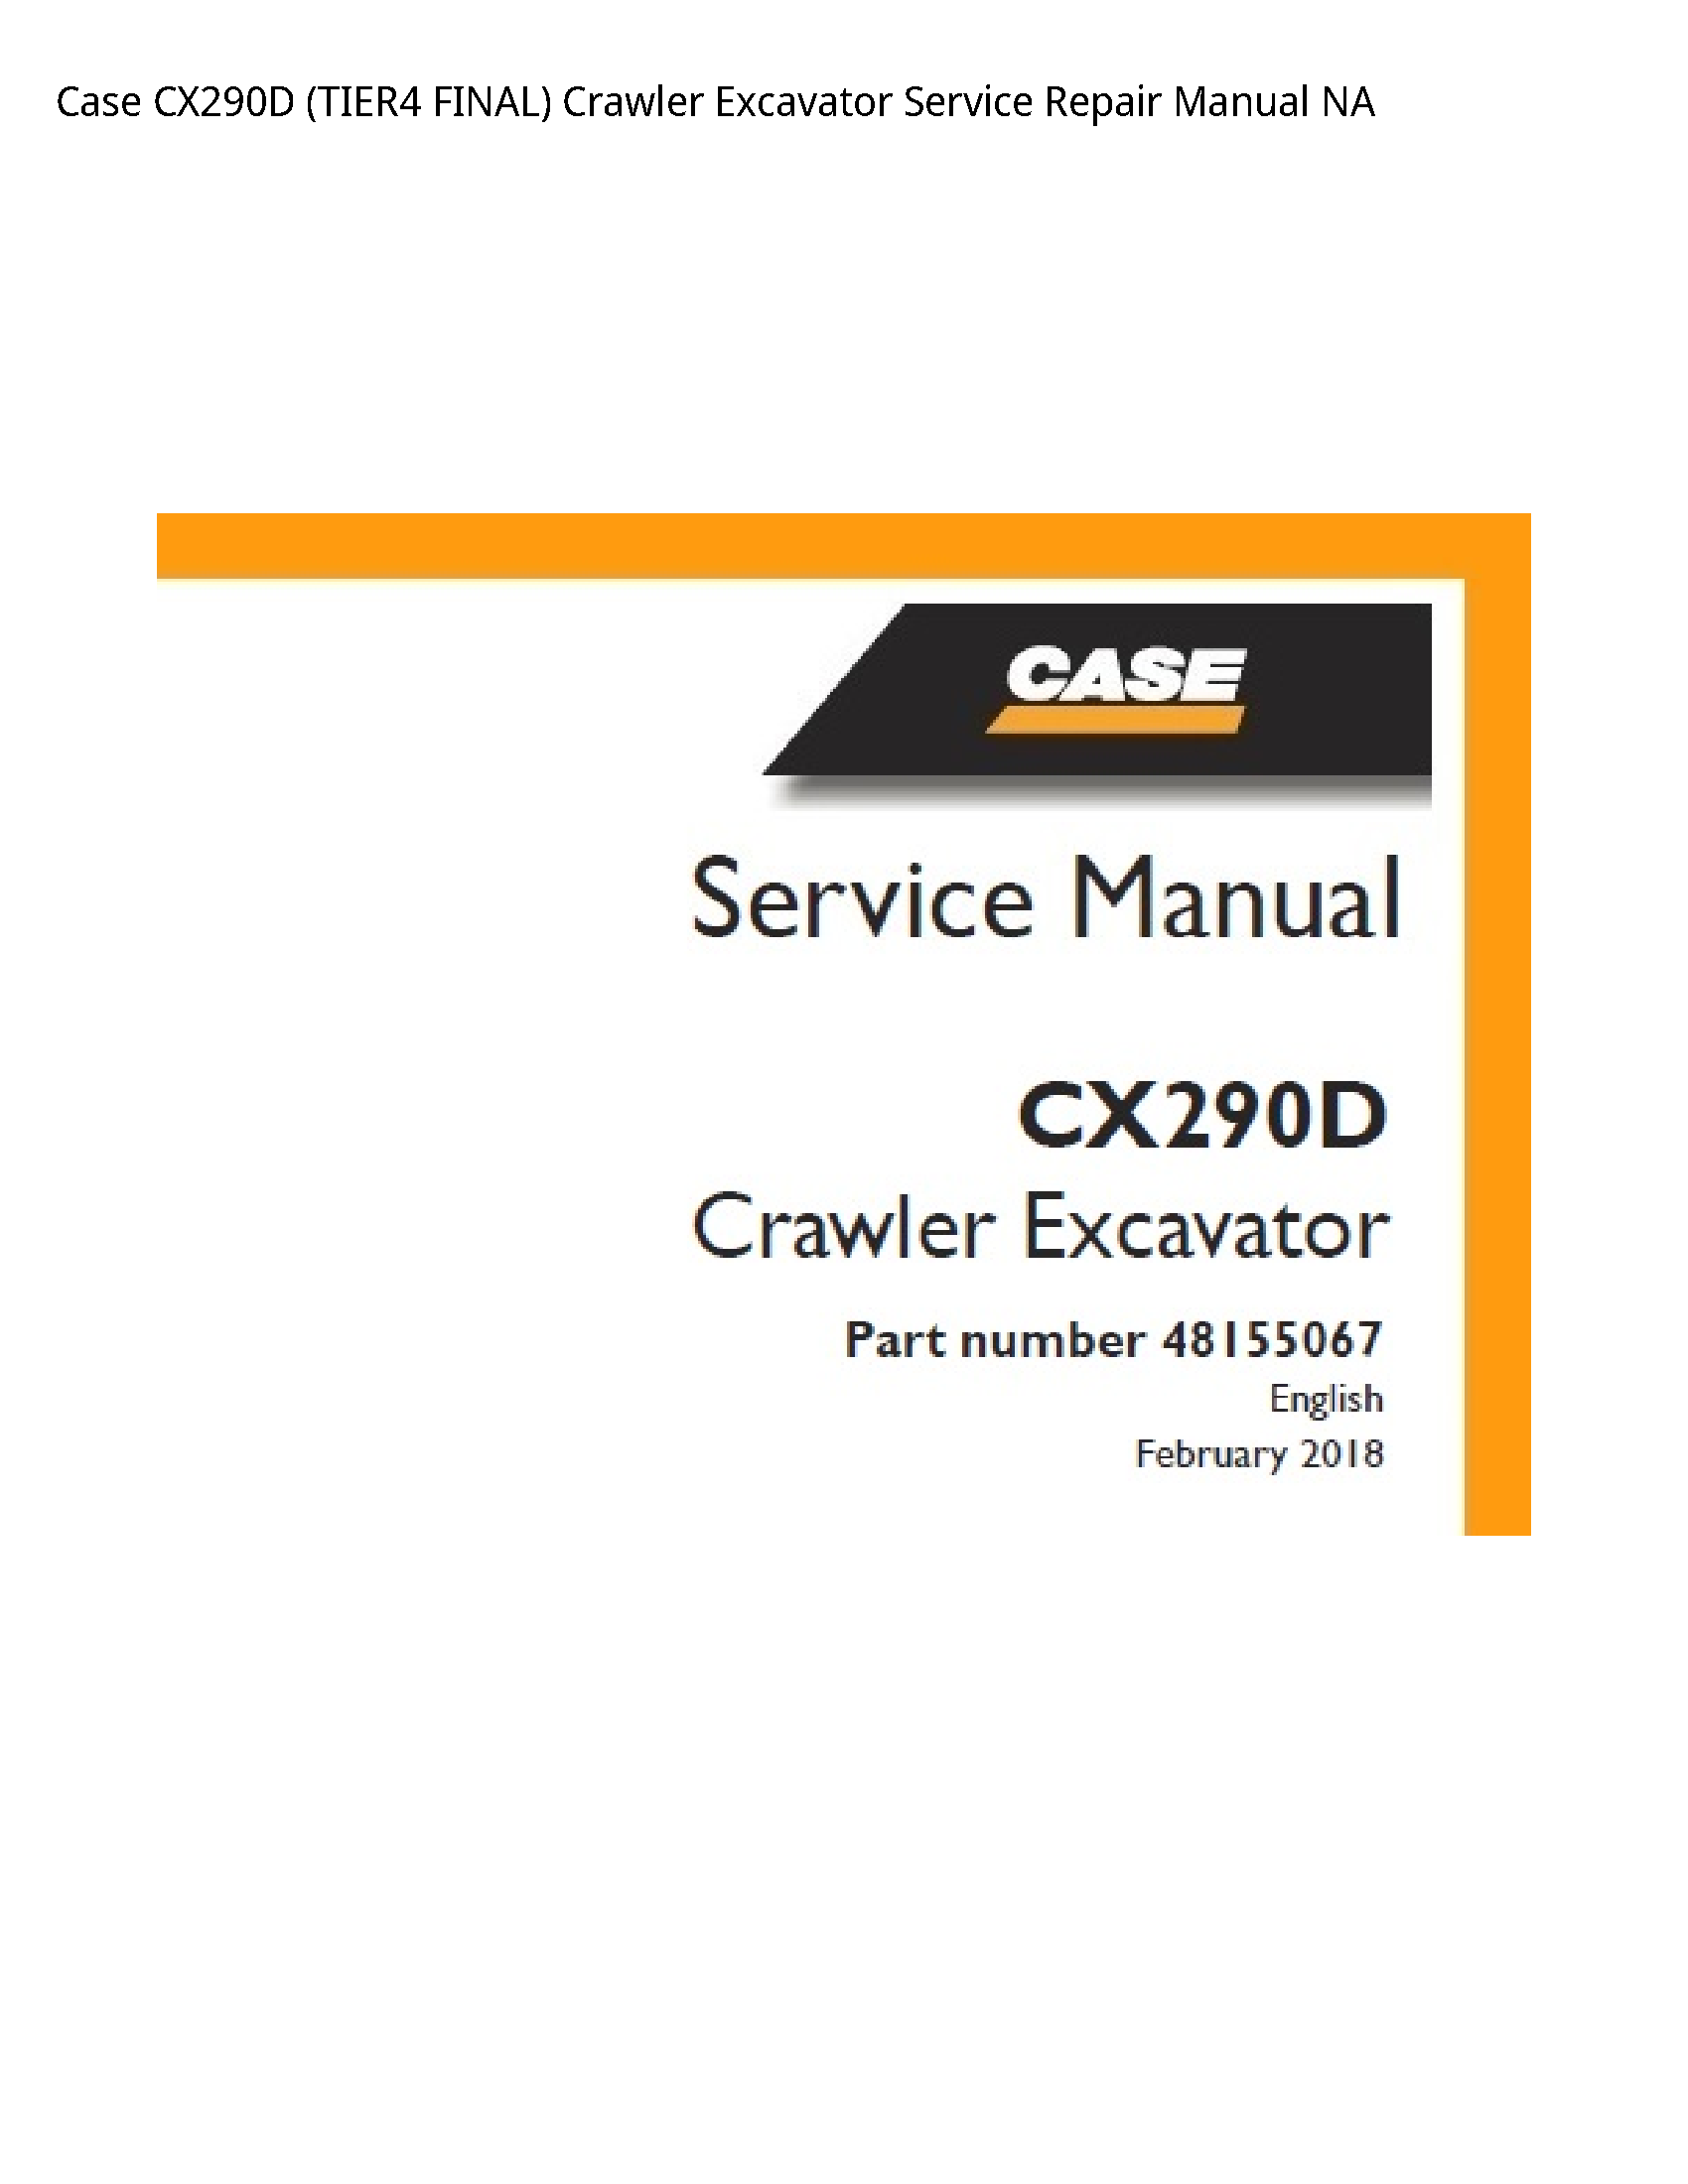 Case/Case IH CX290D FINAL) Crawler Excavator manual